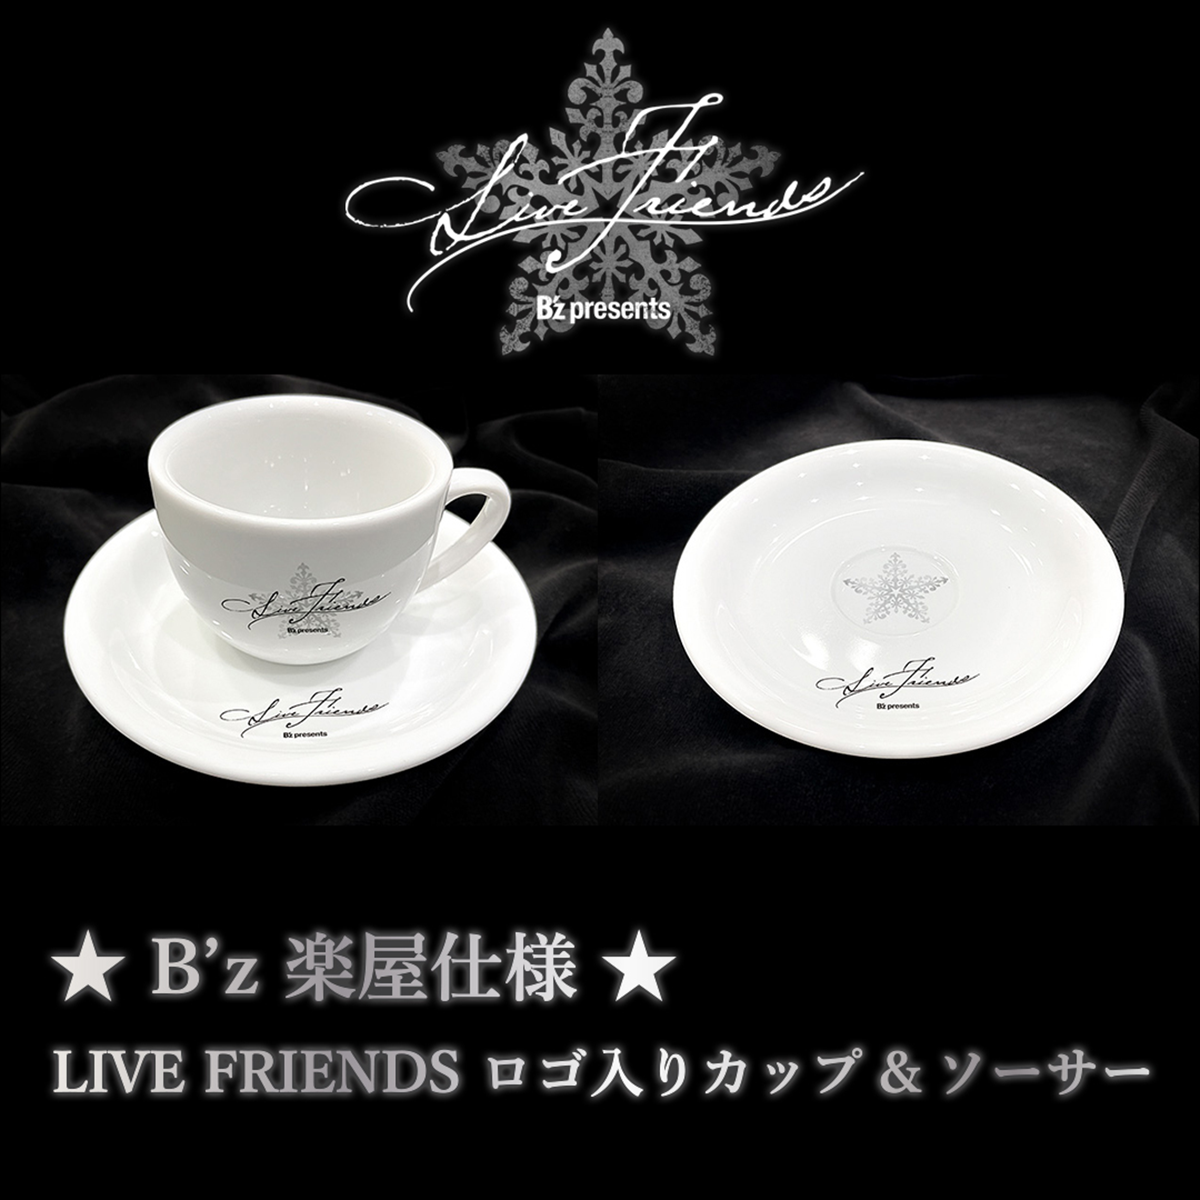 「B'z楽屋仕様・LIVE FRIENDSロゴ入りカップ & ソーサー」のイメージ画像